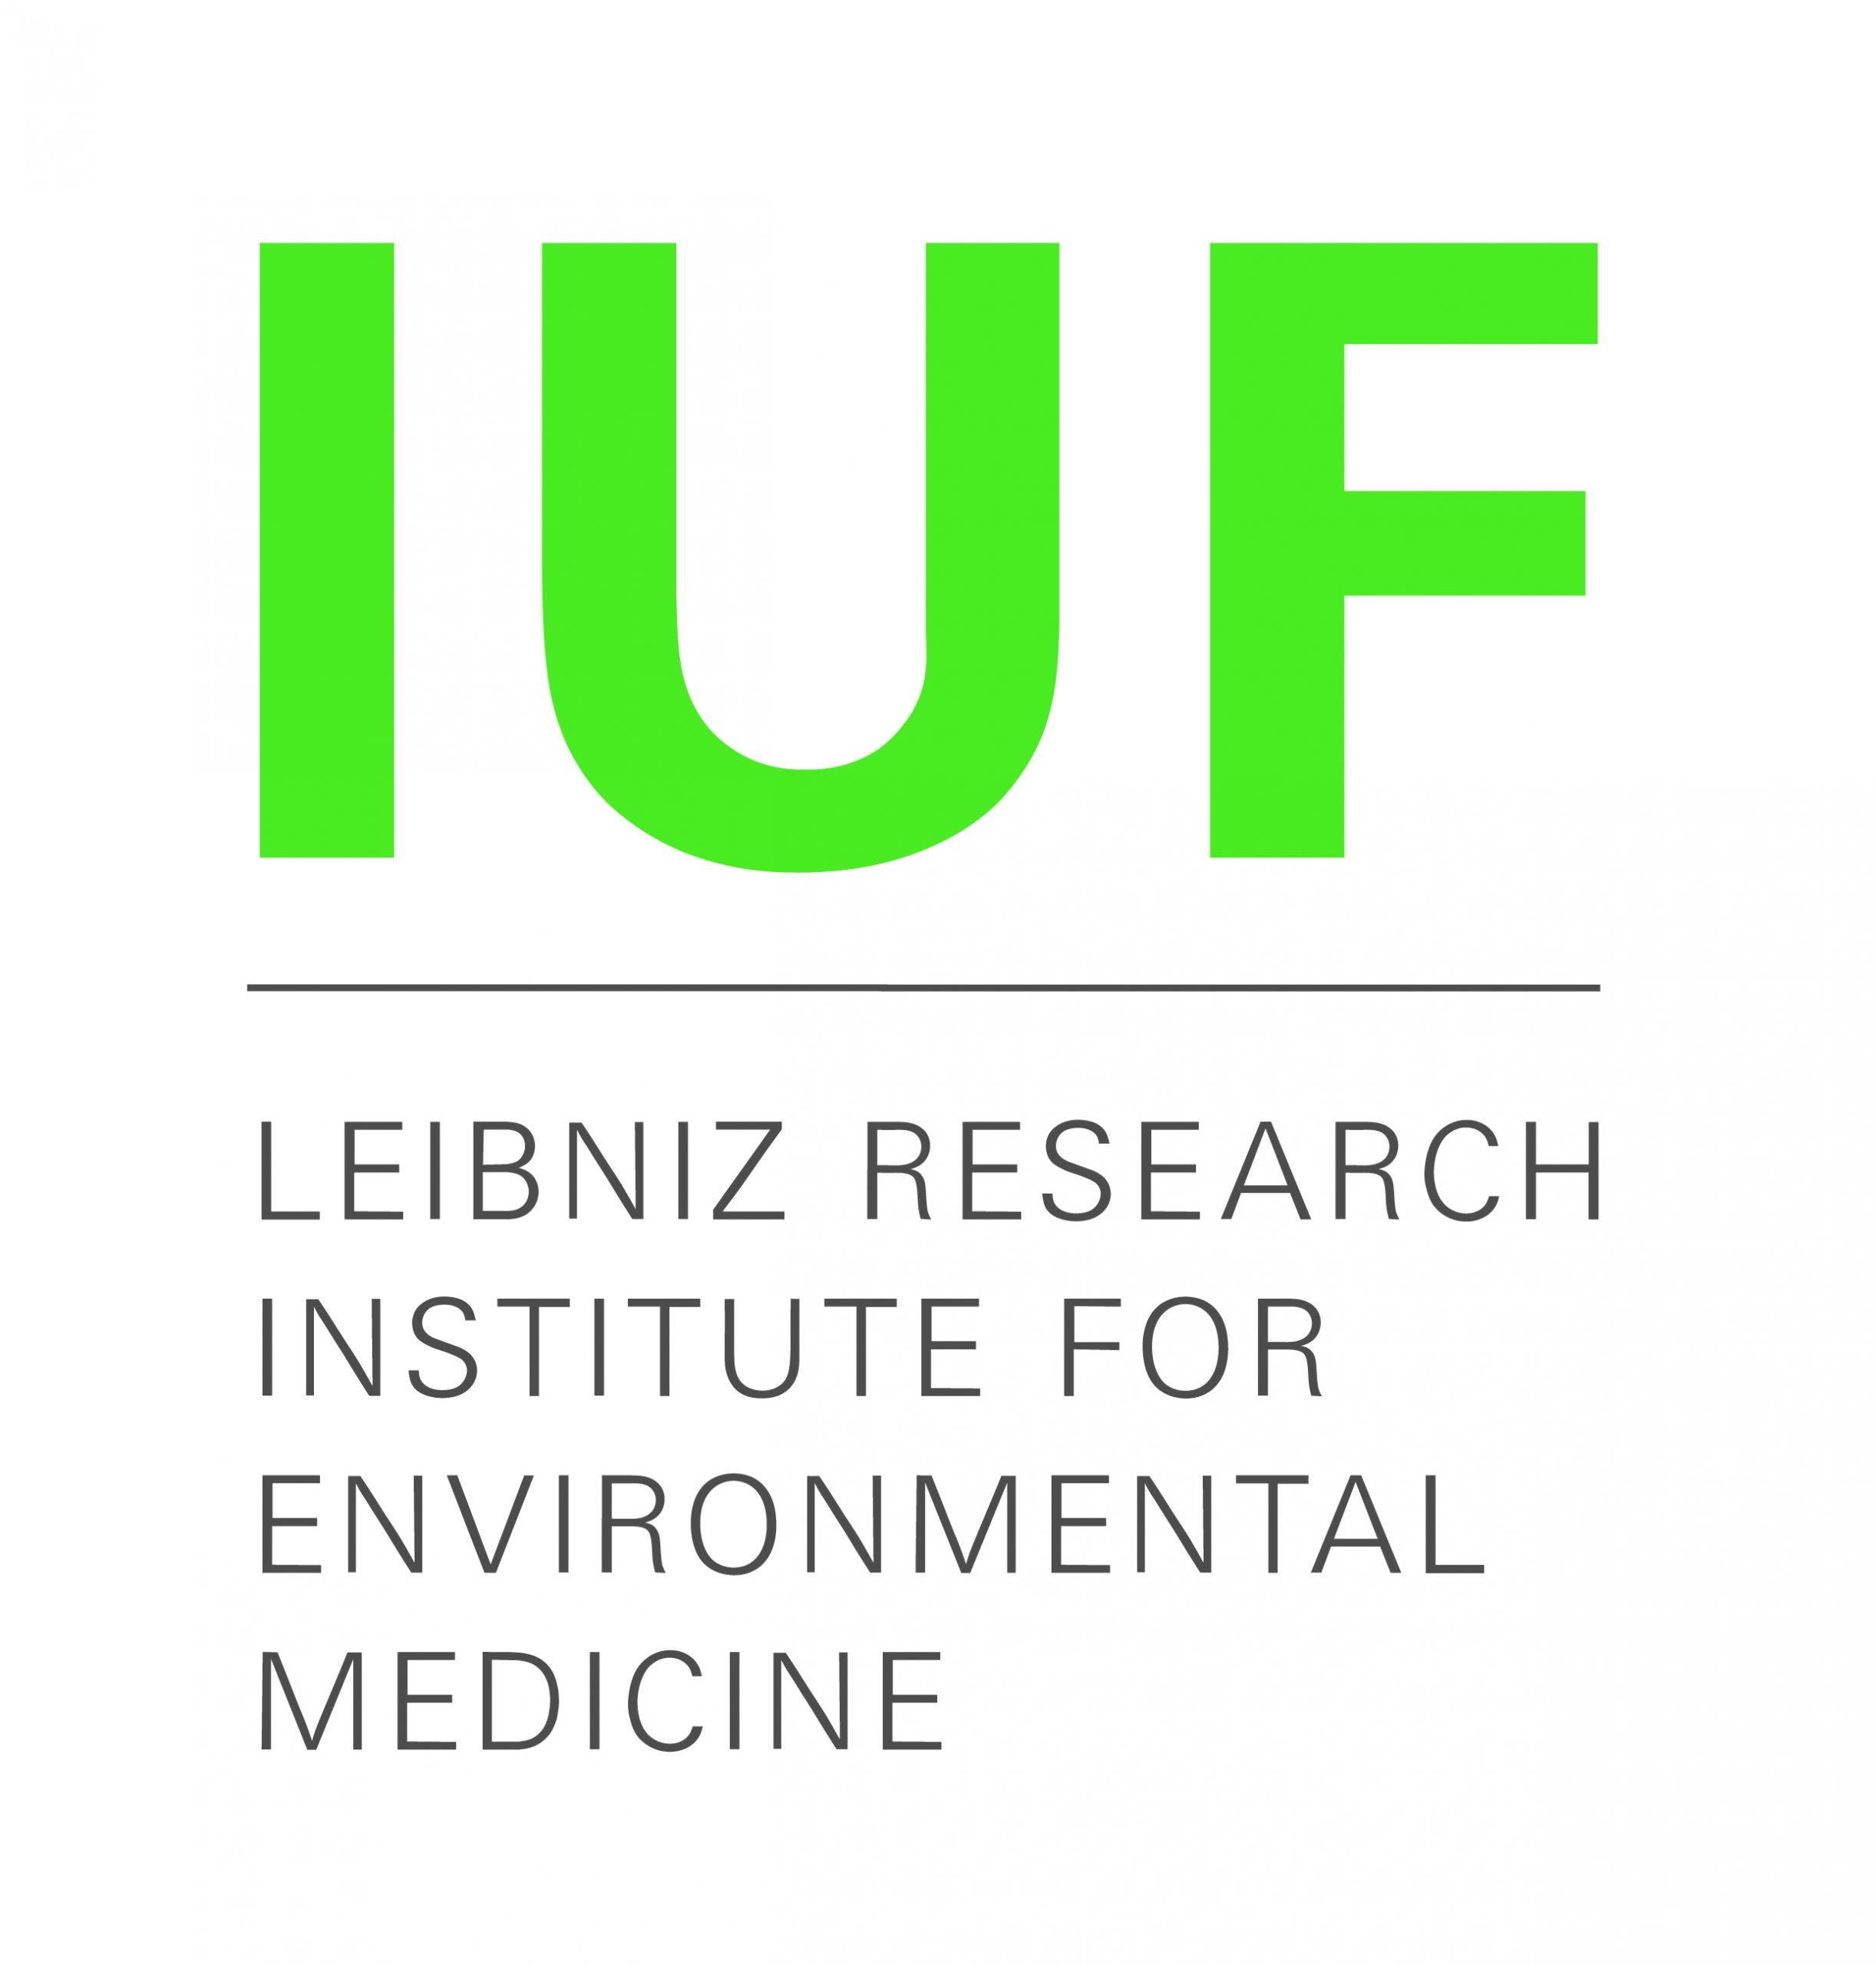 Leibniz Research Institute for Environmental Medicine logo of the University of Düsseldorf in green